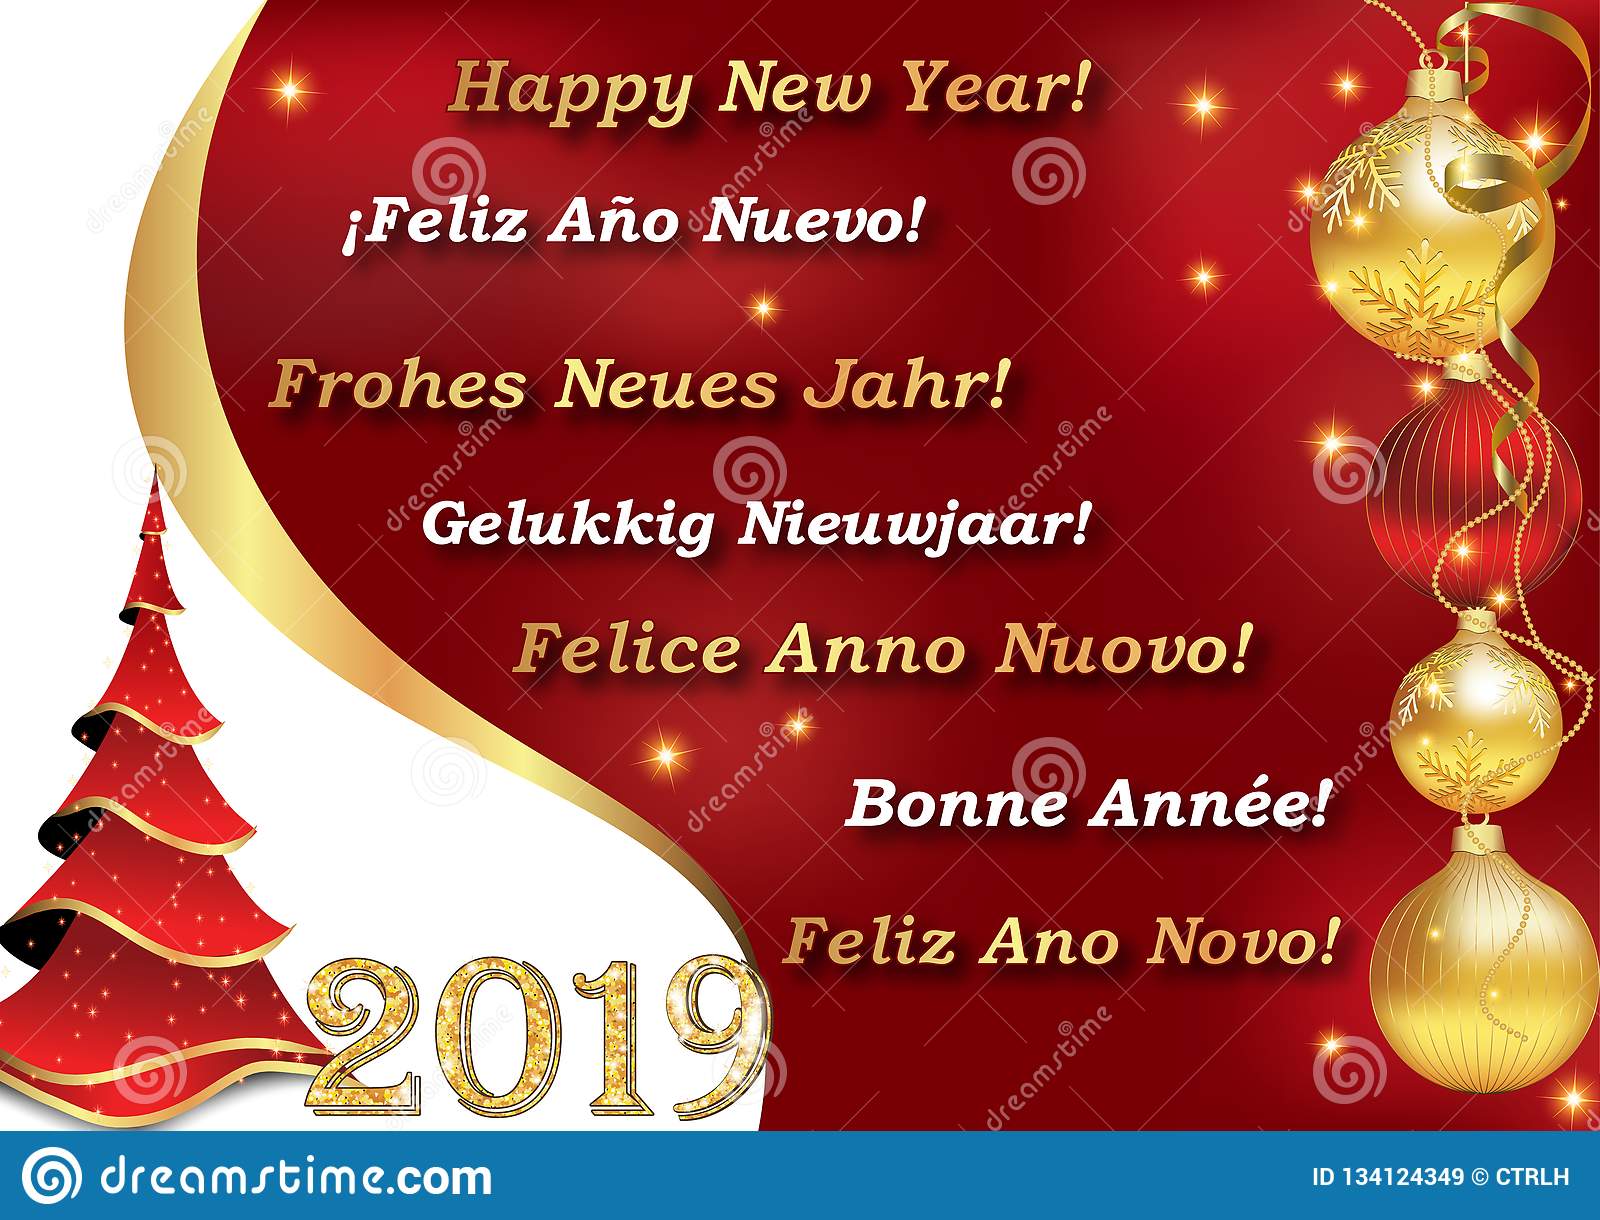 happy-new-year-written-languages-happy-new-year-written-many-languages-english-french-spanish-...jpg